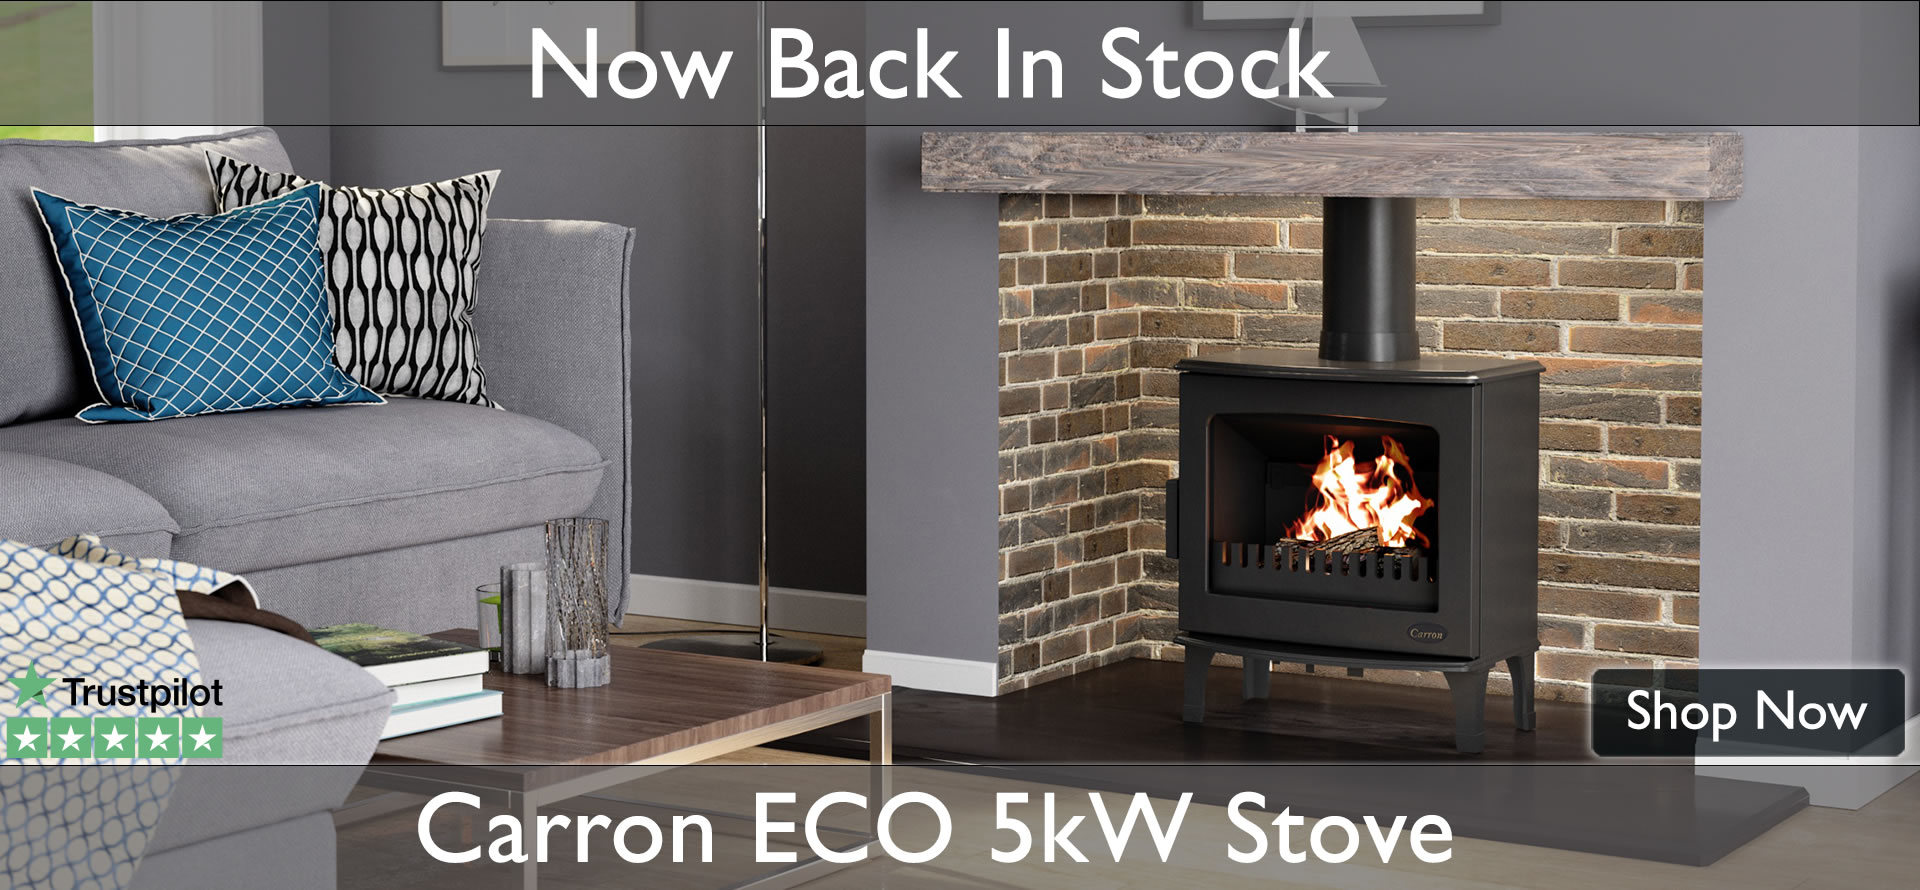 Carron Eco Stove Back In Stock